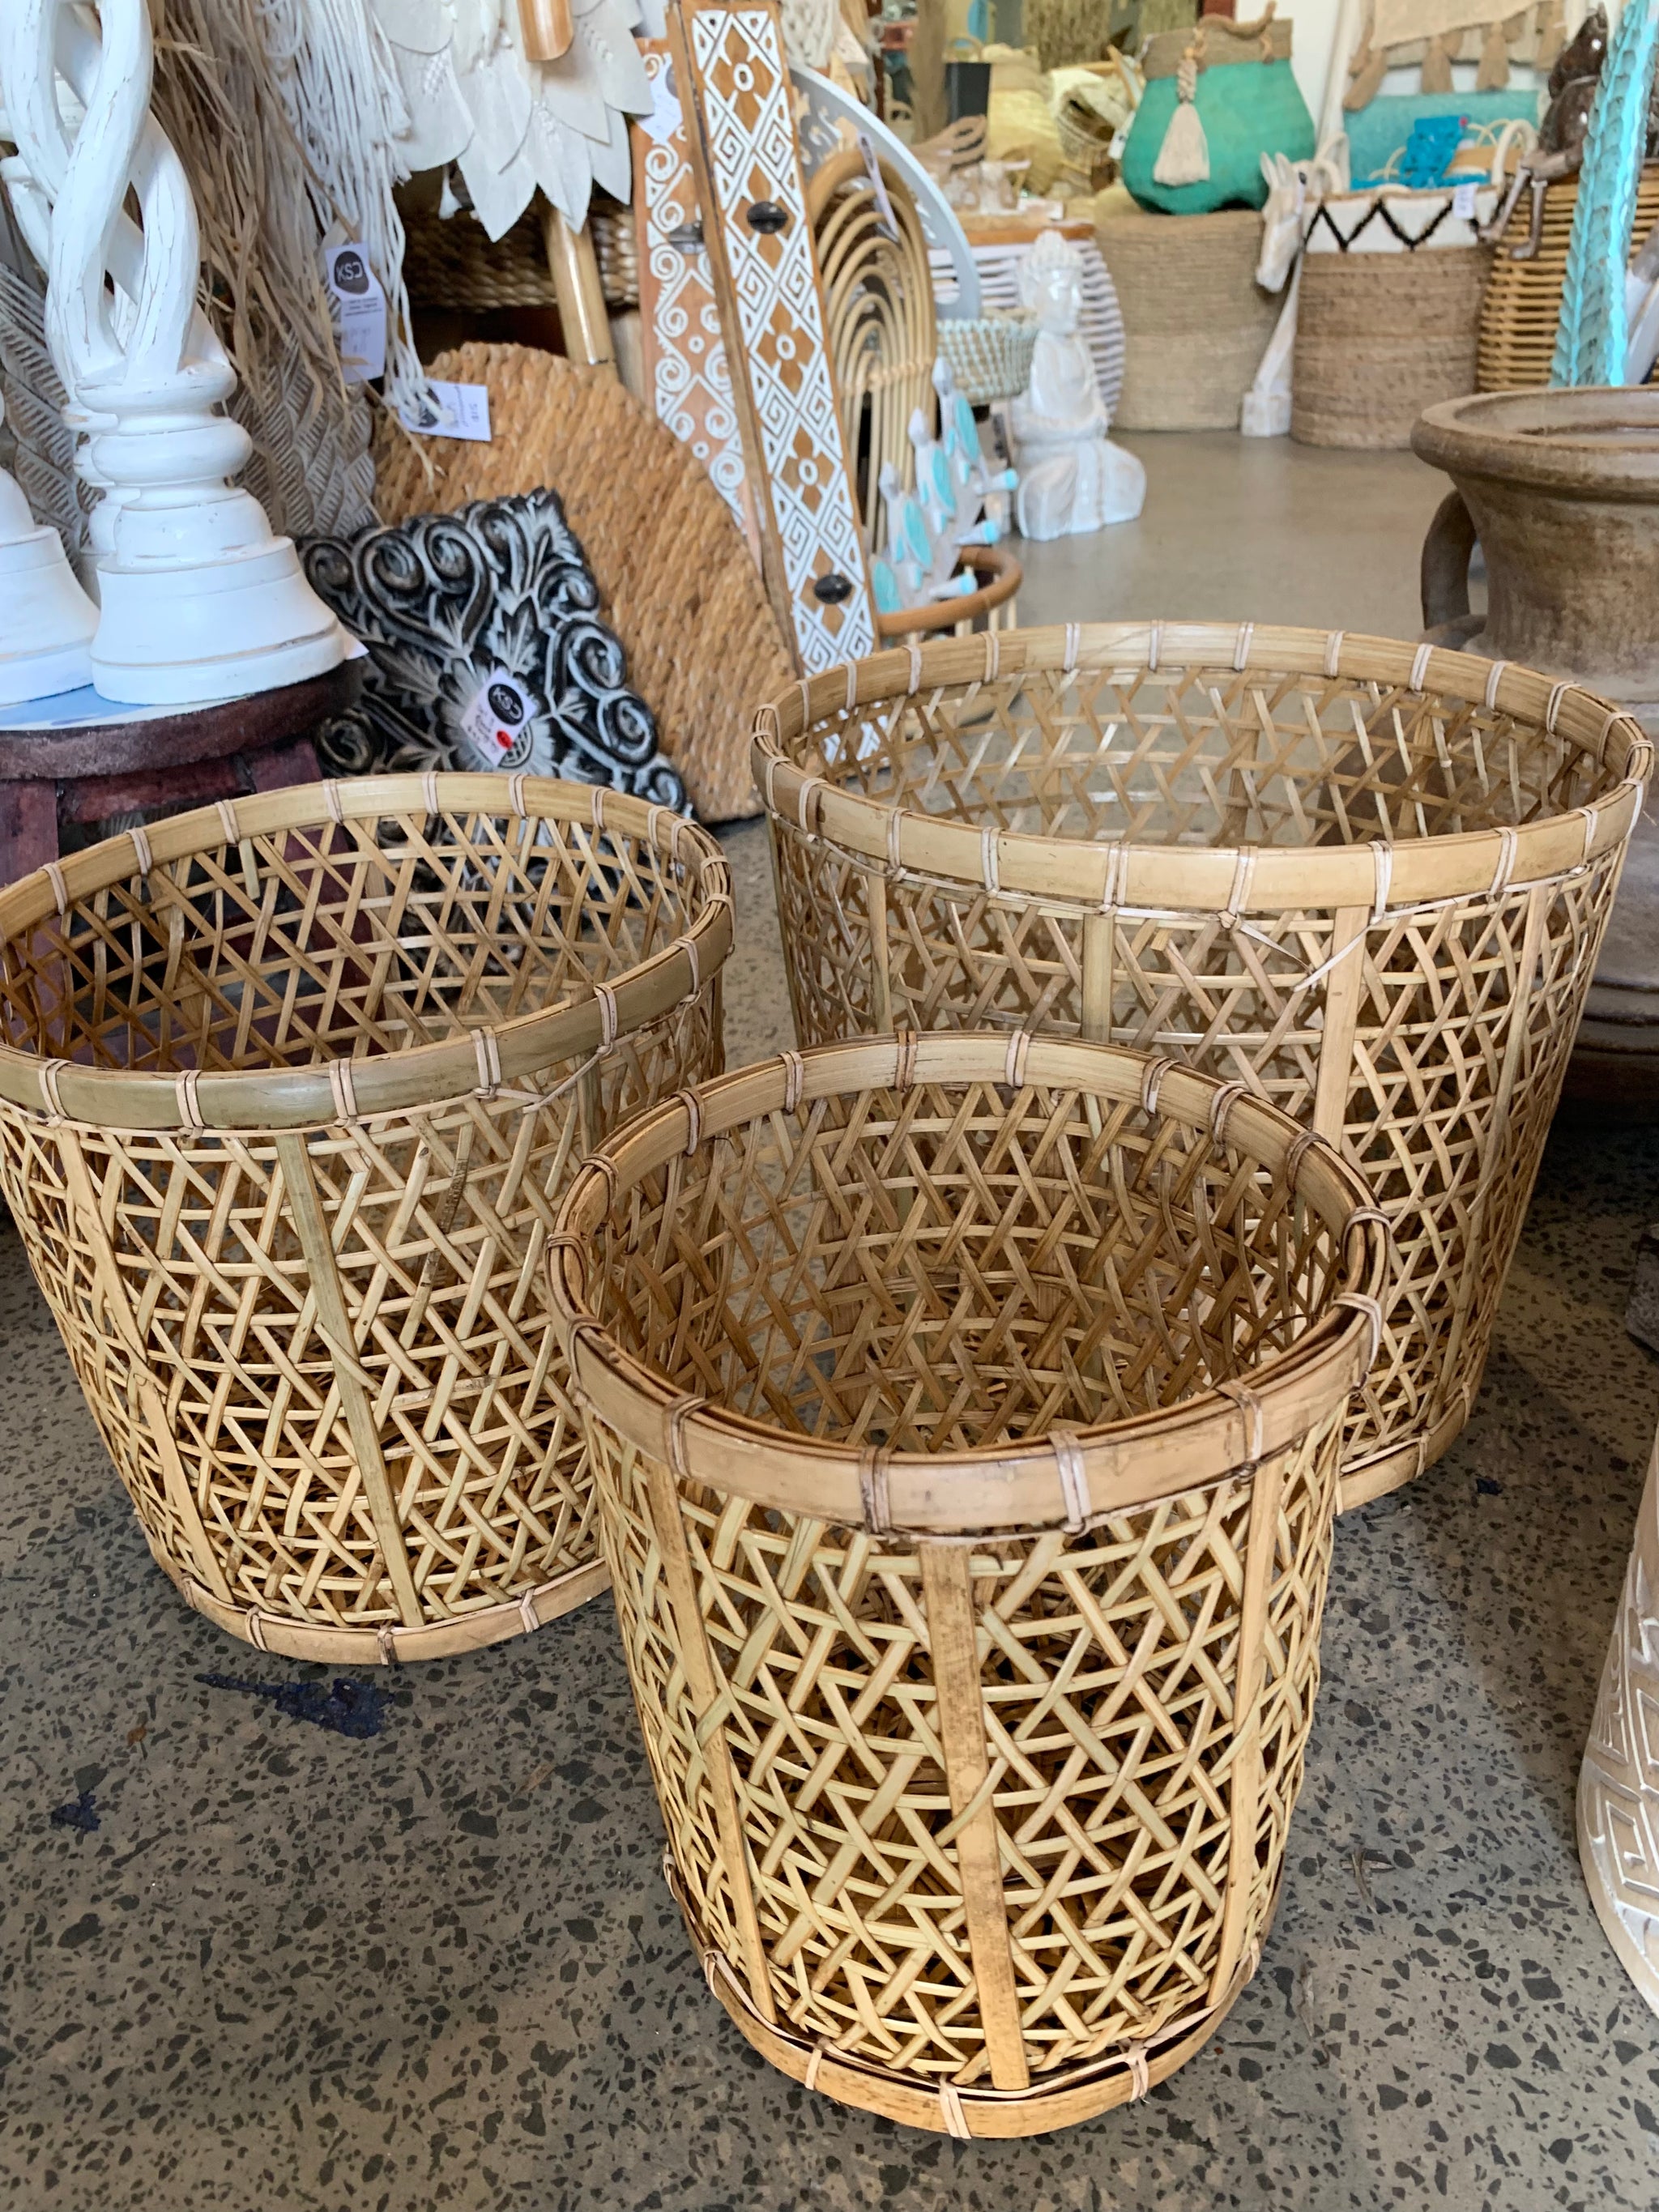 Natural Set 3 Woven Baskets. Usually $70